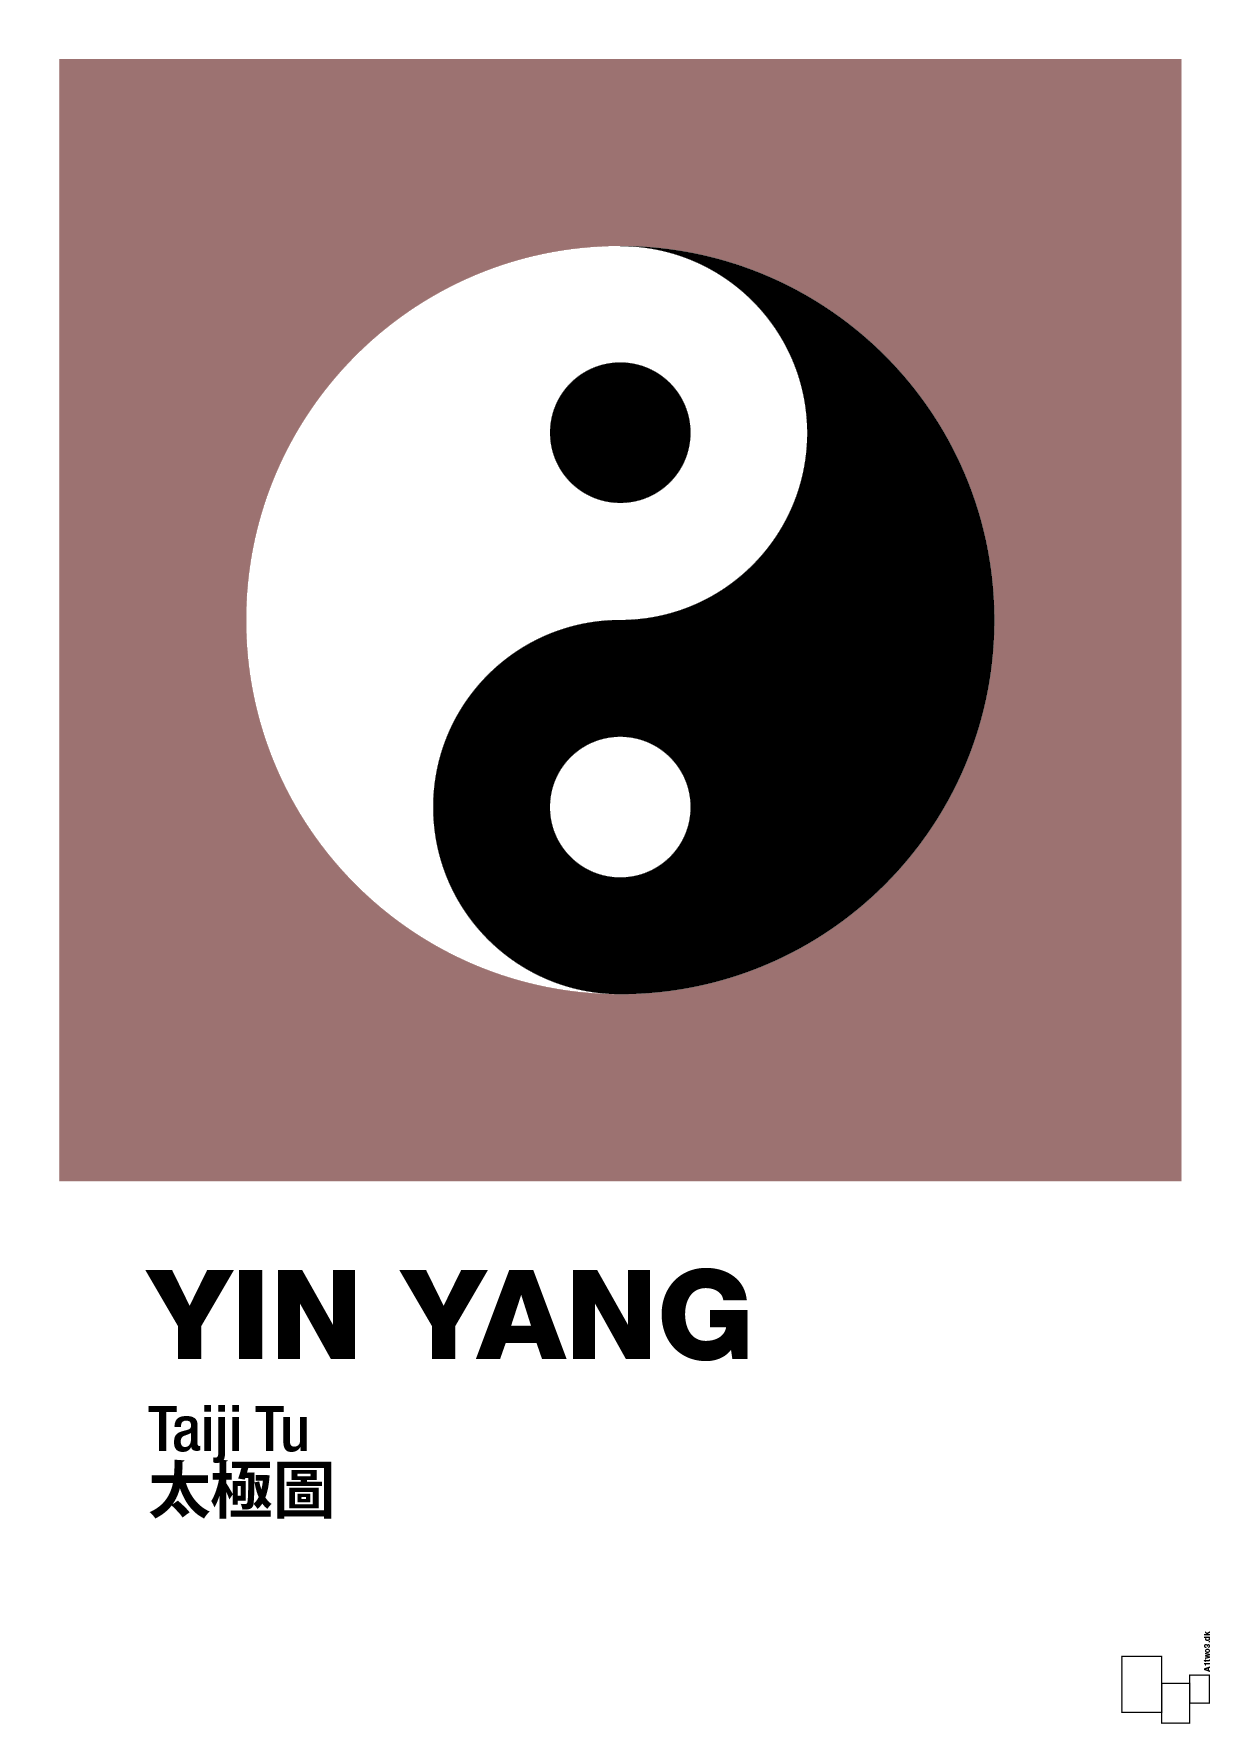 yin yang - Plakat med Videnskab i Plum